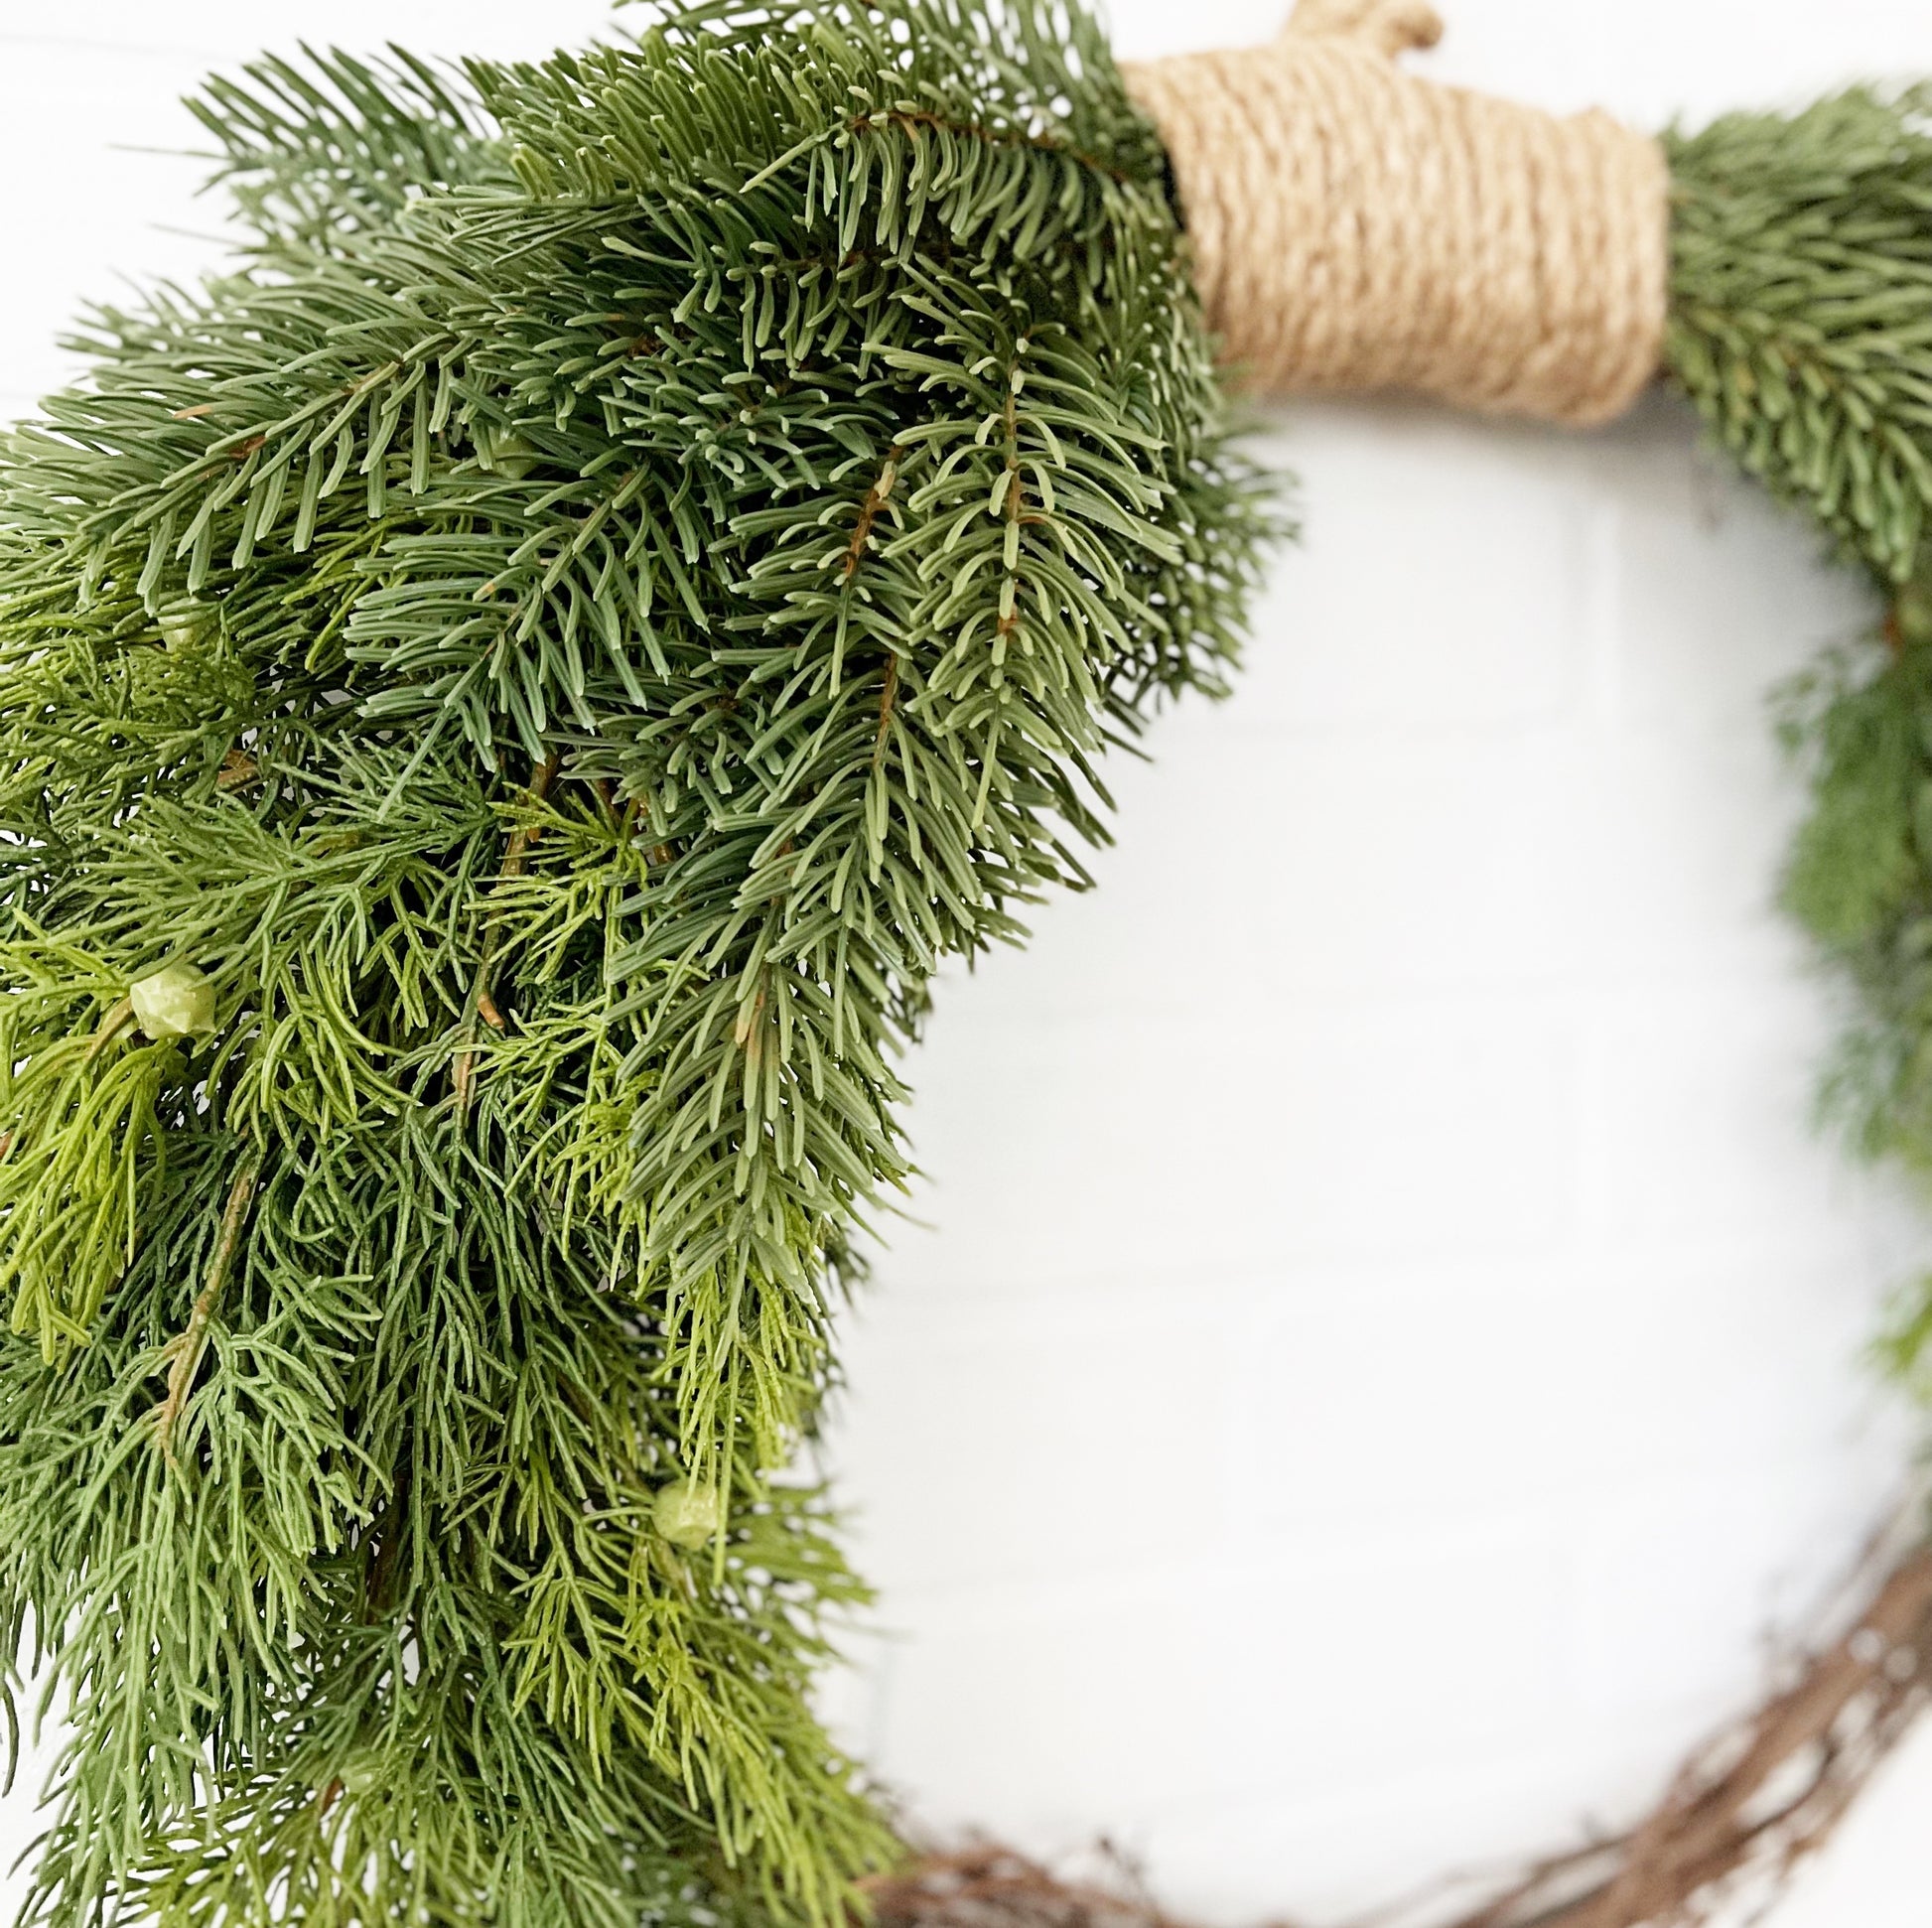 How to Make a Winter Greenery Wreath